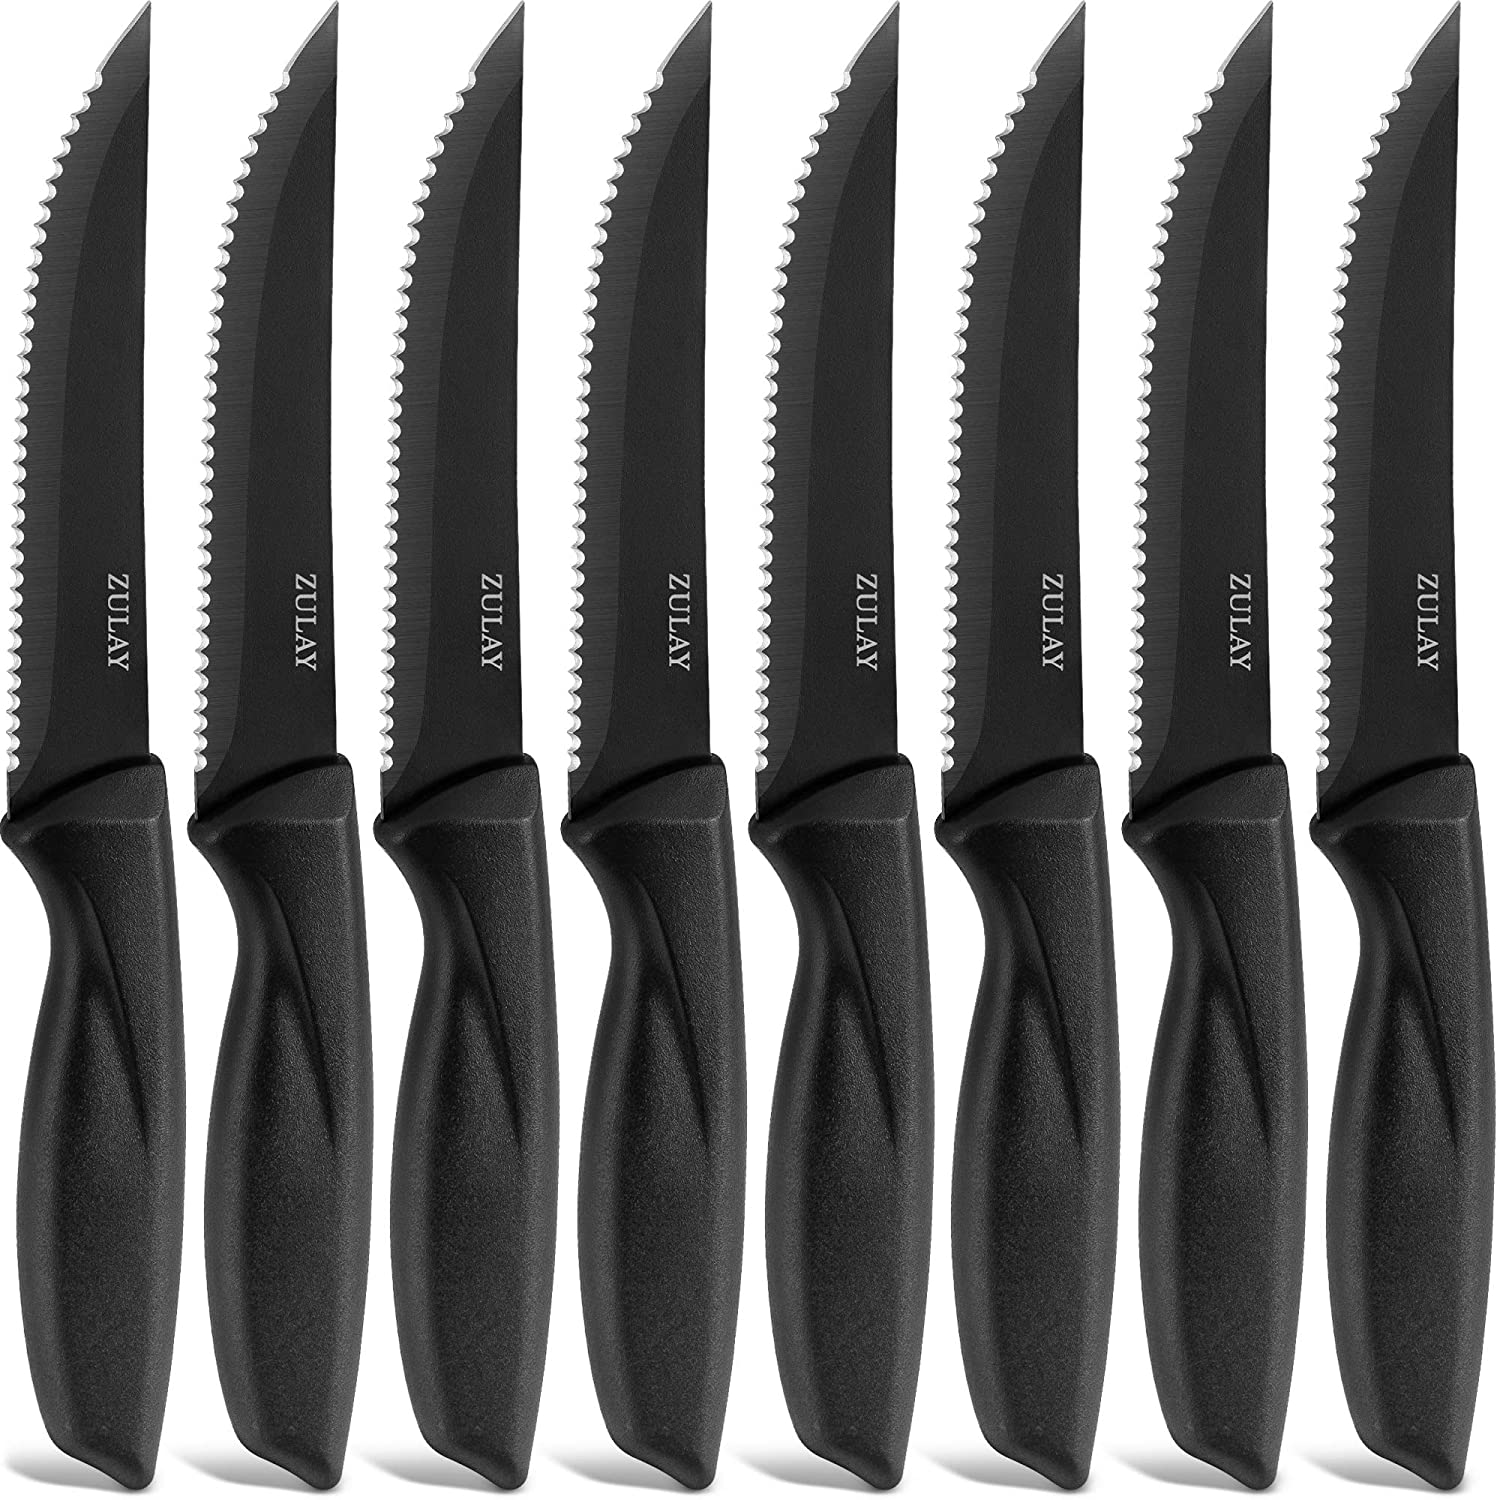 Stainless Steel Steak Knives (Black) - Set of 8 - Zulay KitchenZulay Kitchen